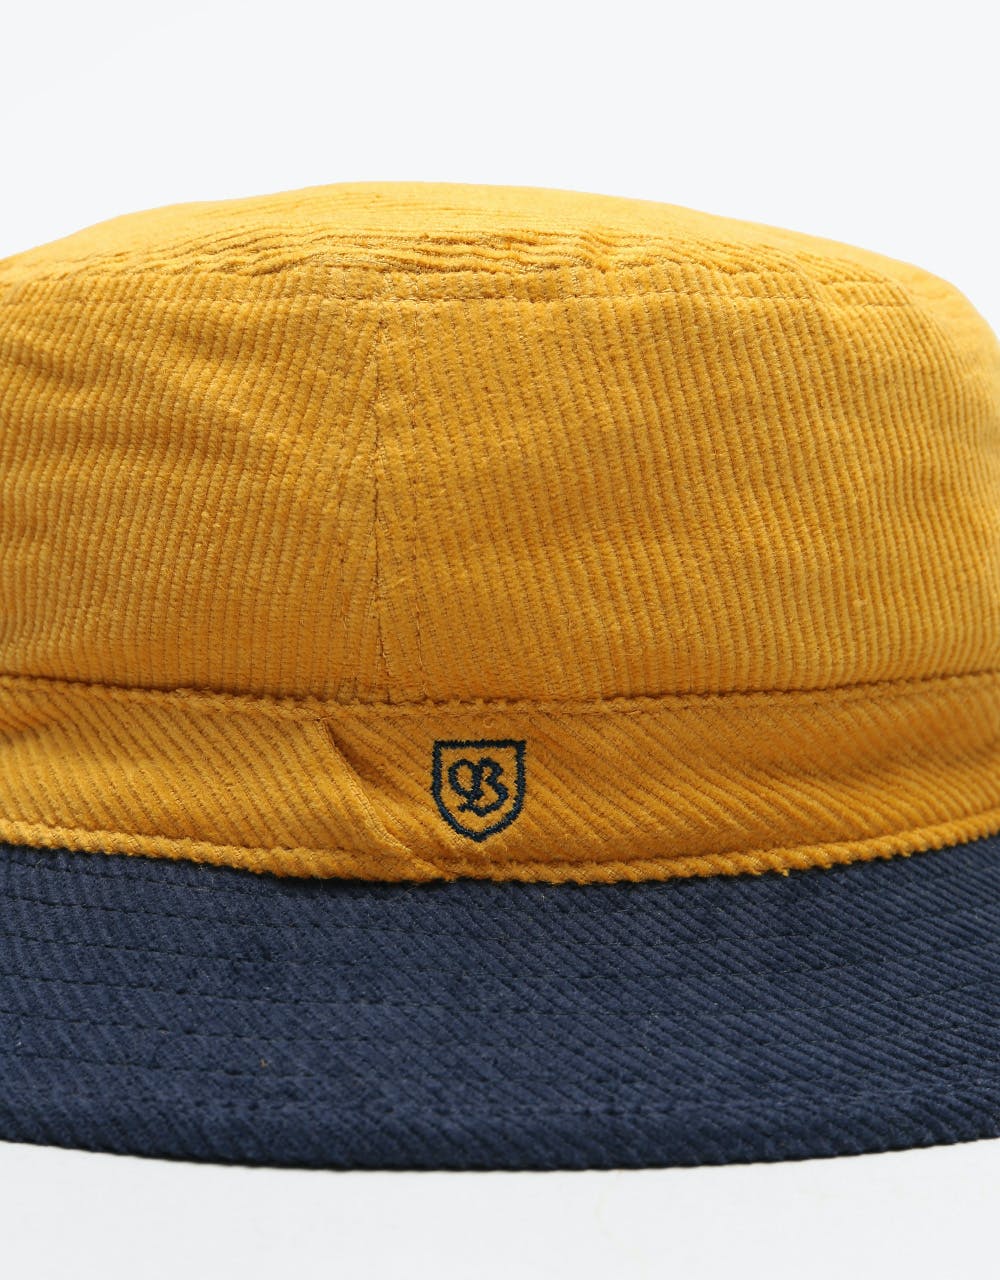 Brixton B-Shield Bucket Hat - Sunset Yellow/Washed Navy